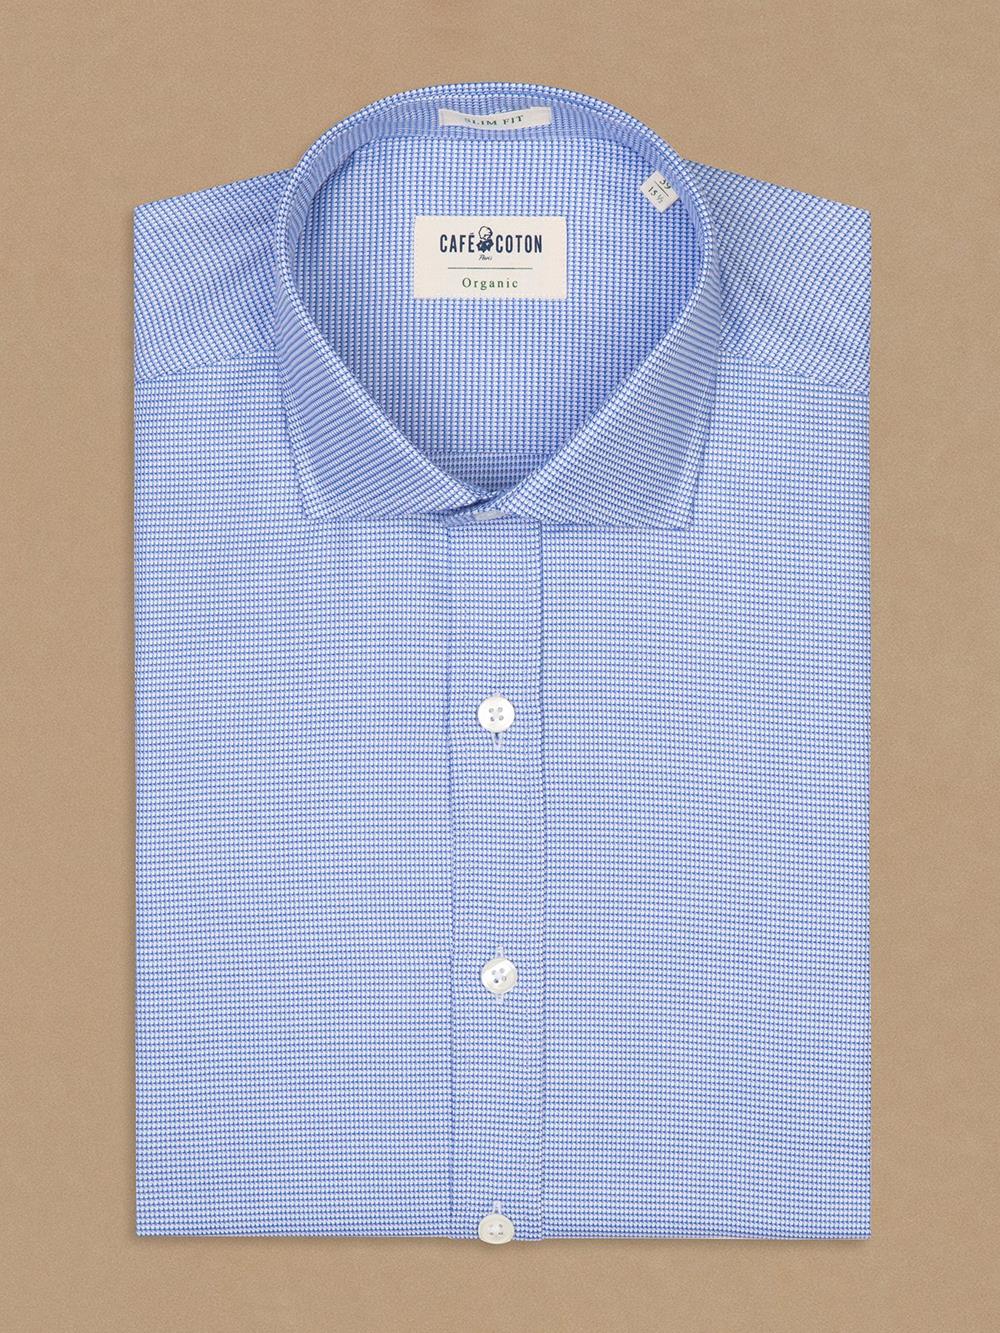 Percy sky blue twill organic shirt